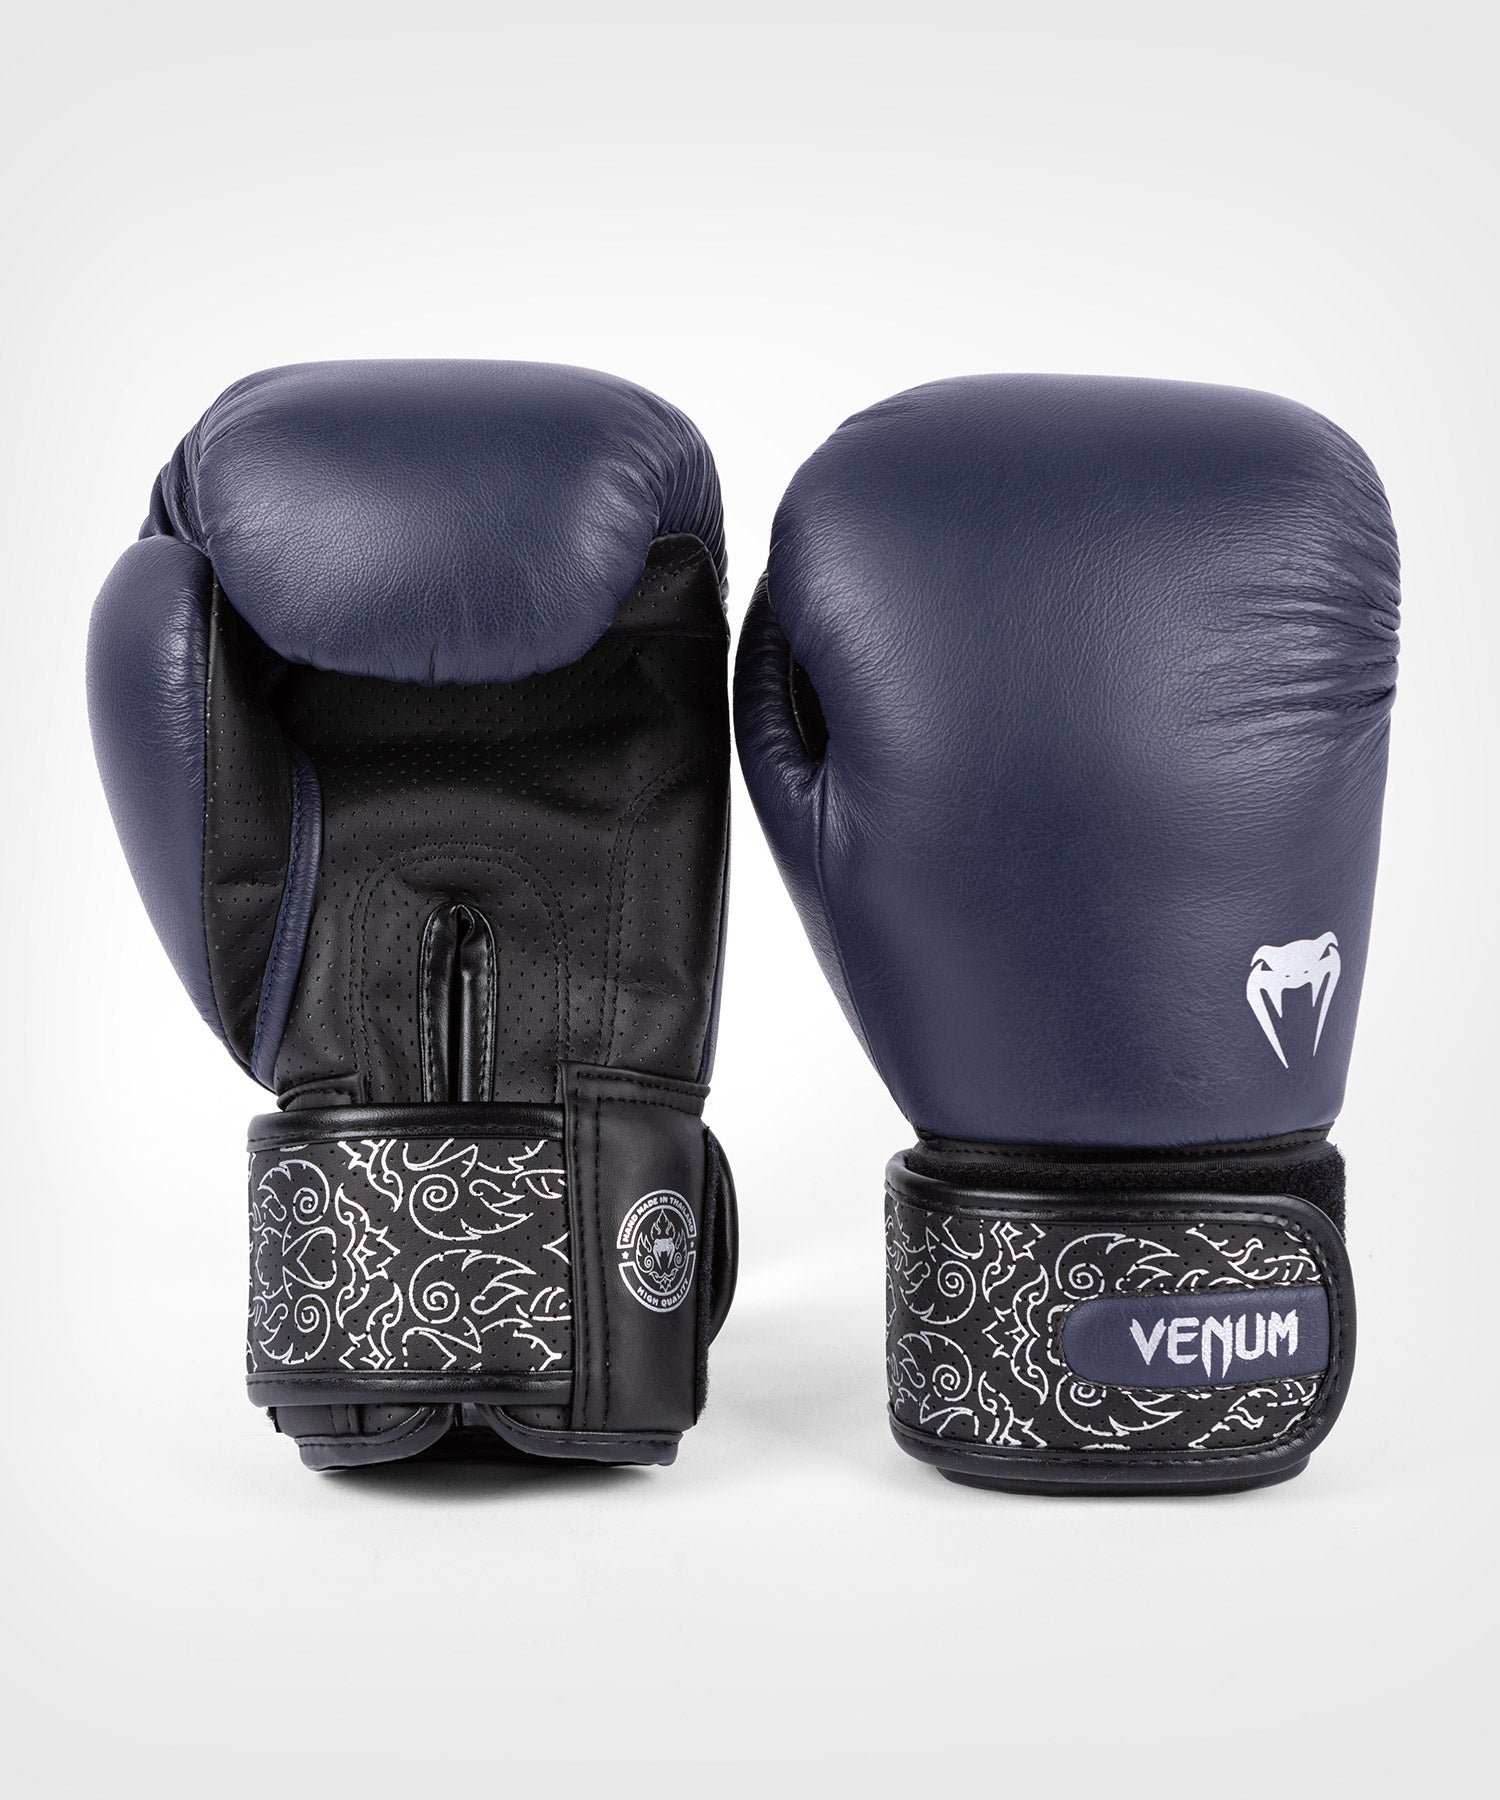 Venum Power 2.0 ボクシンググローブ - ネイビーブルー/ブラック